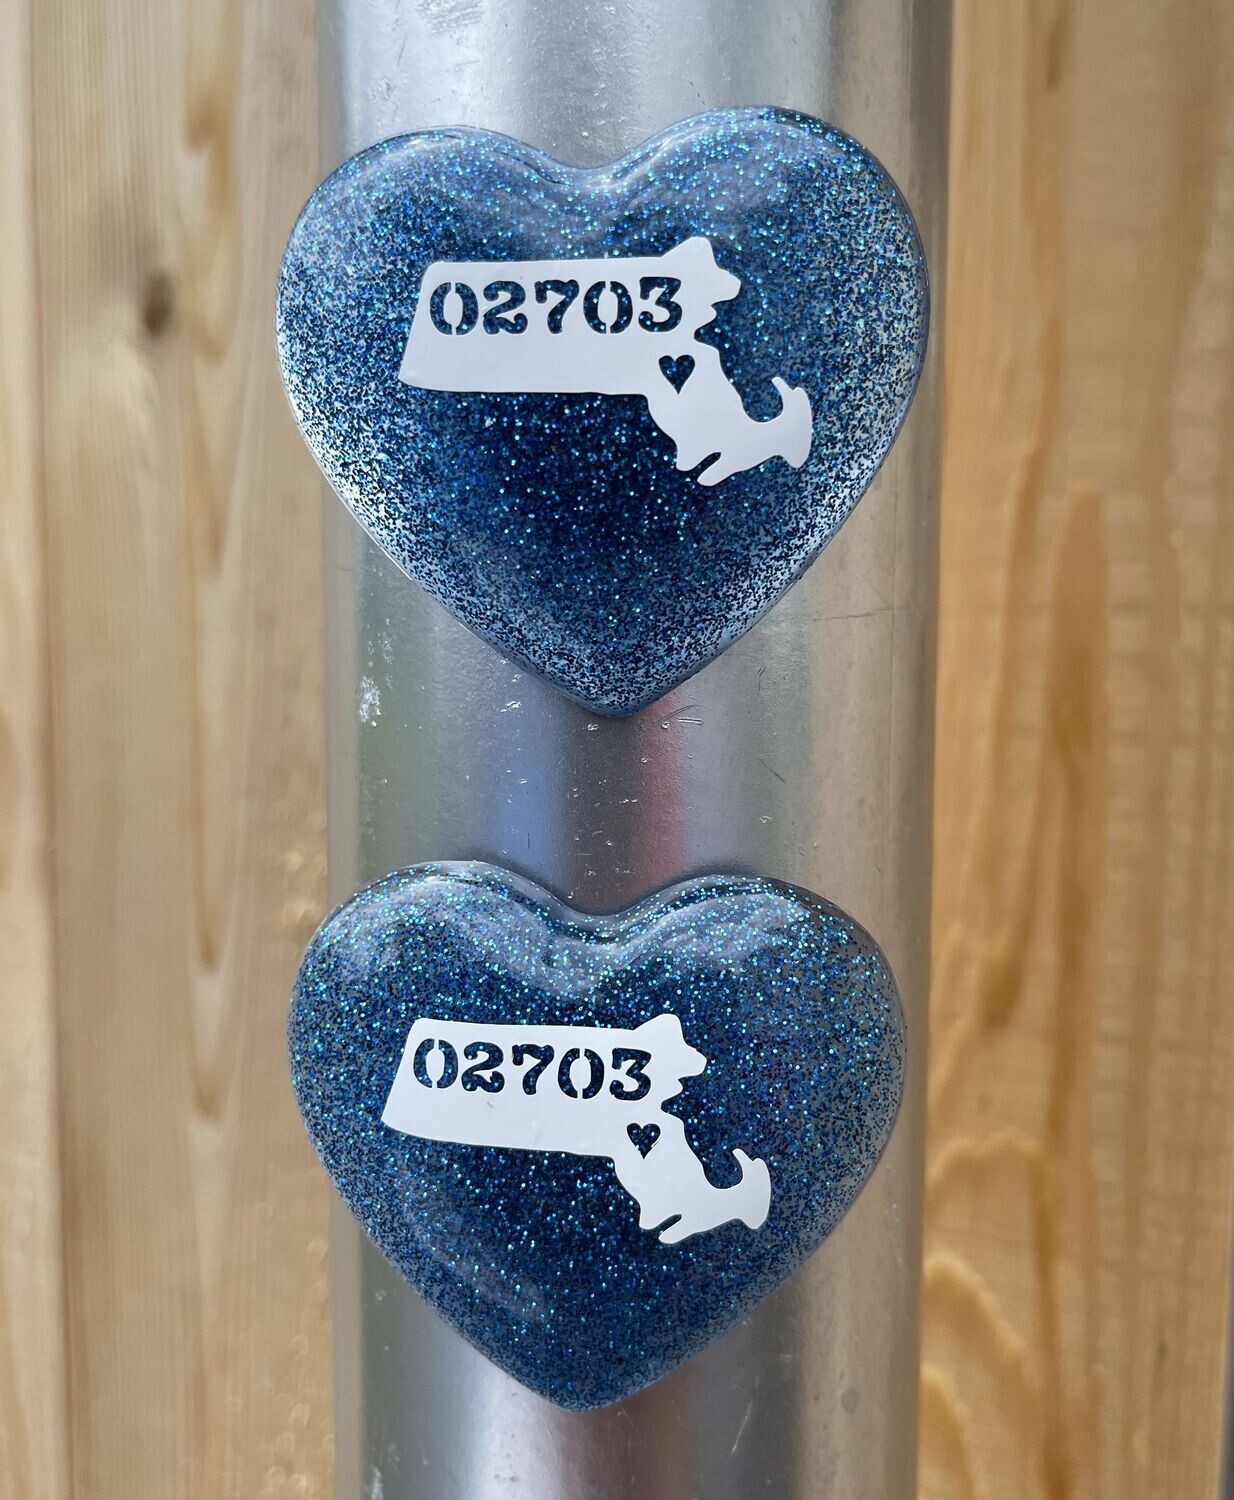 Heart Magnets - 02703 Blue Glitter - 